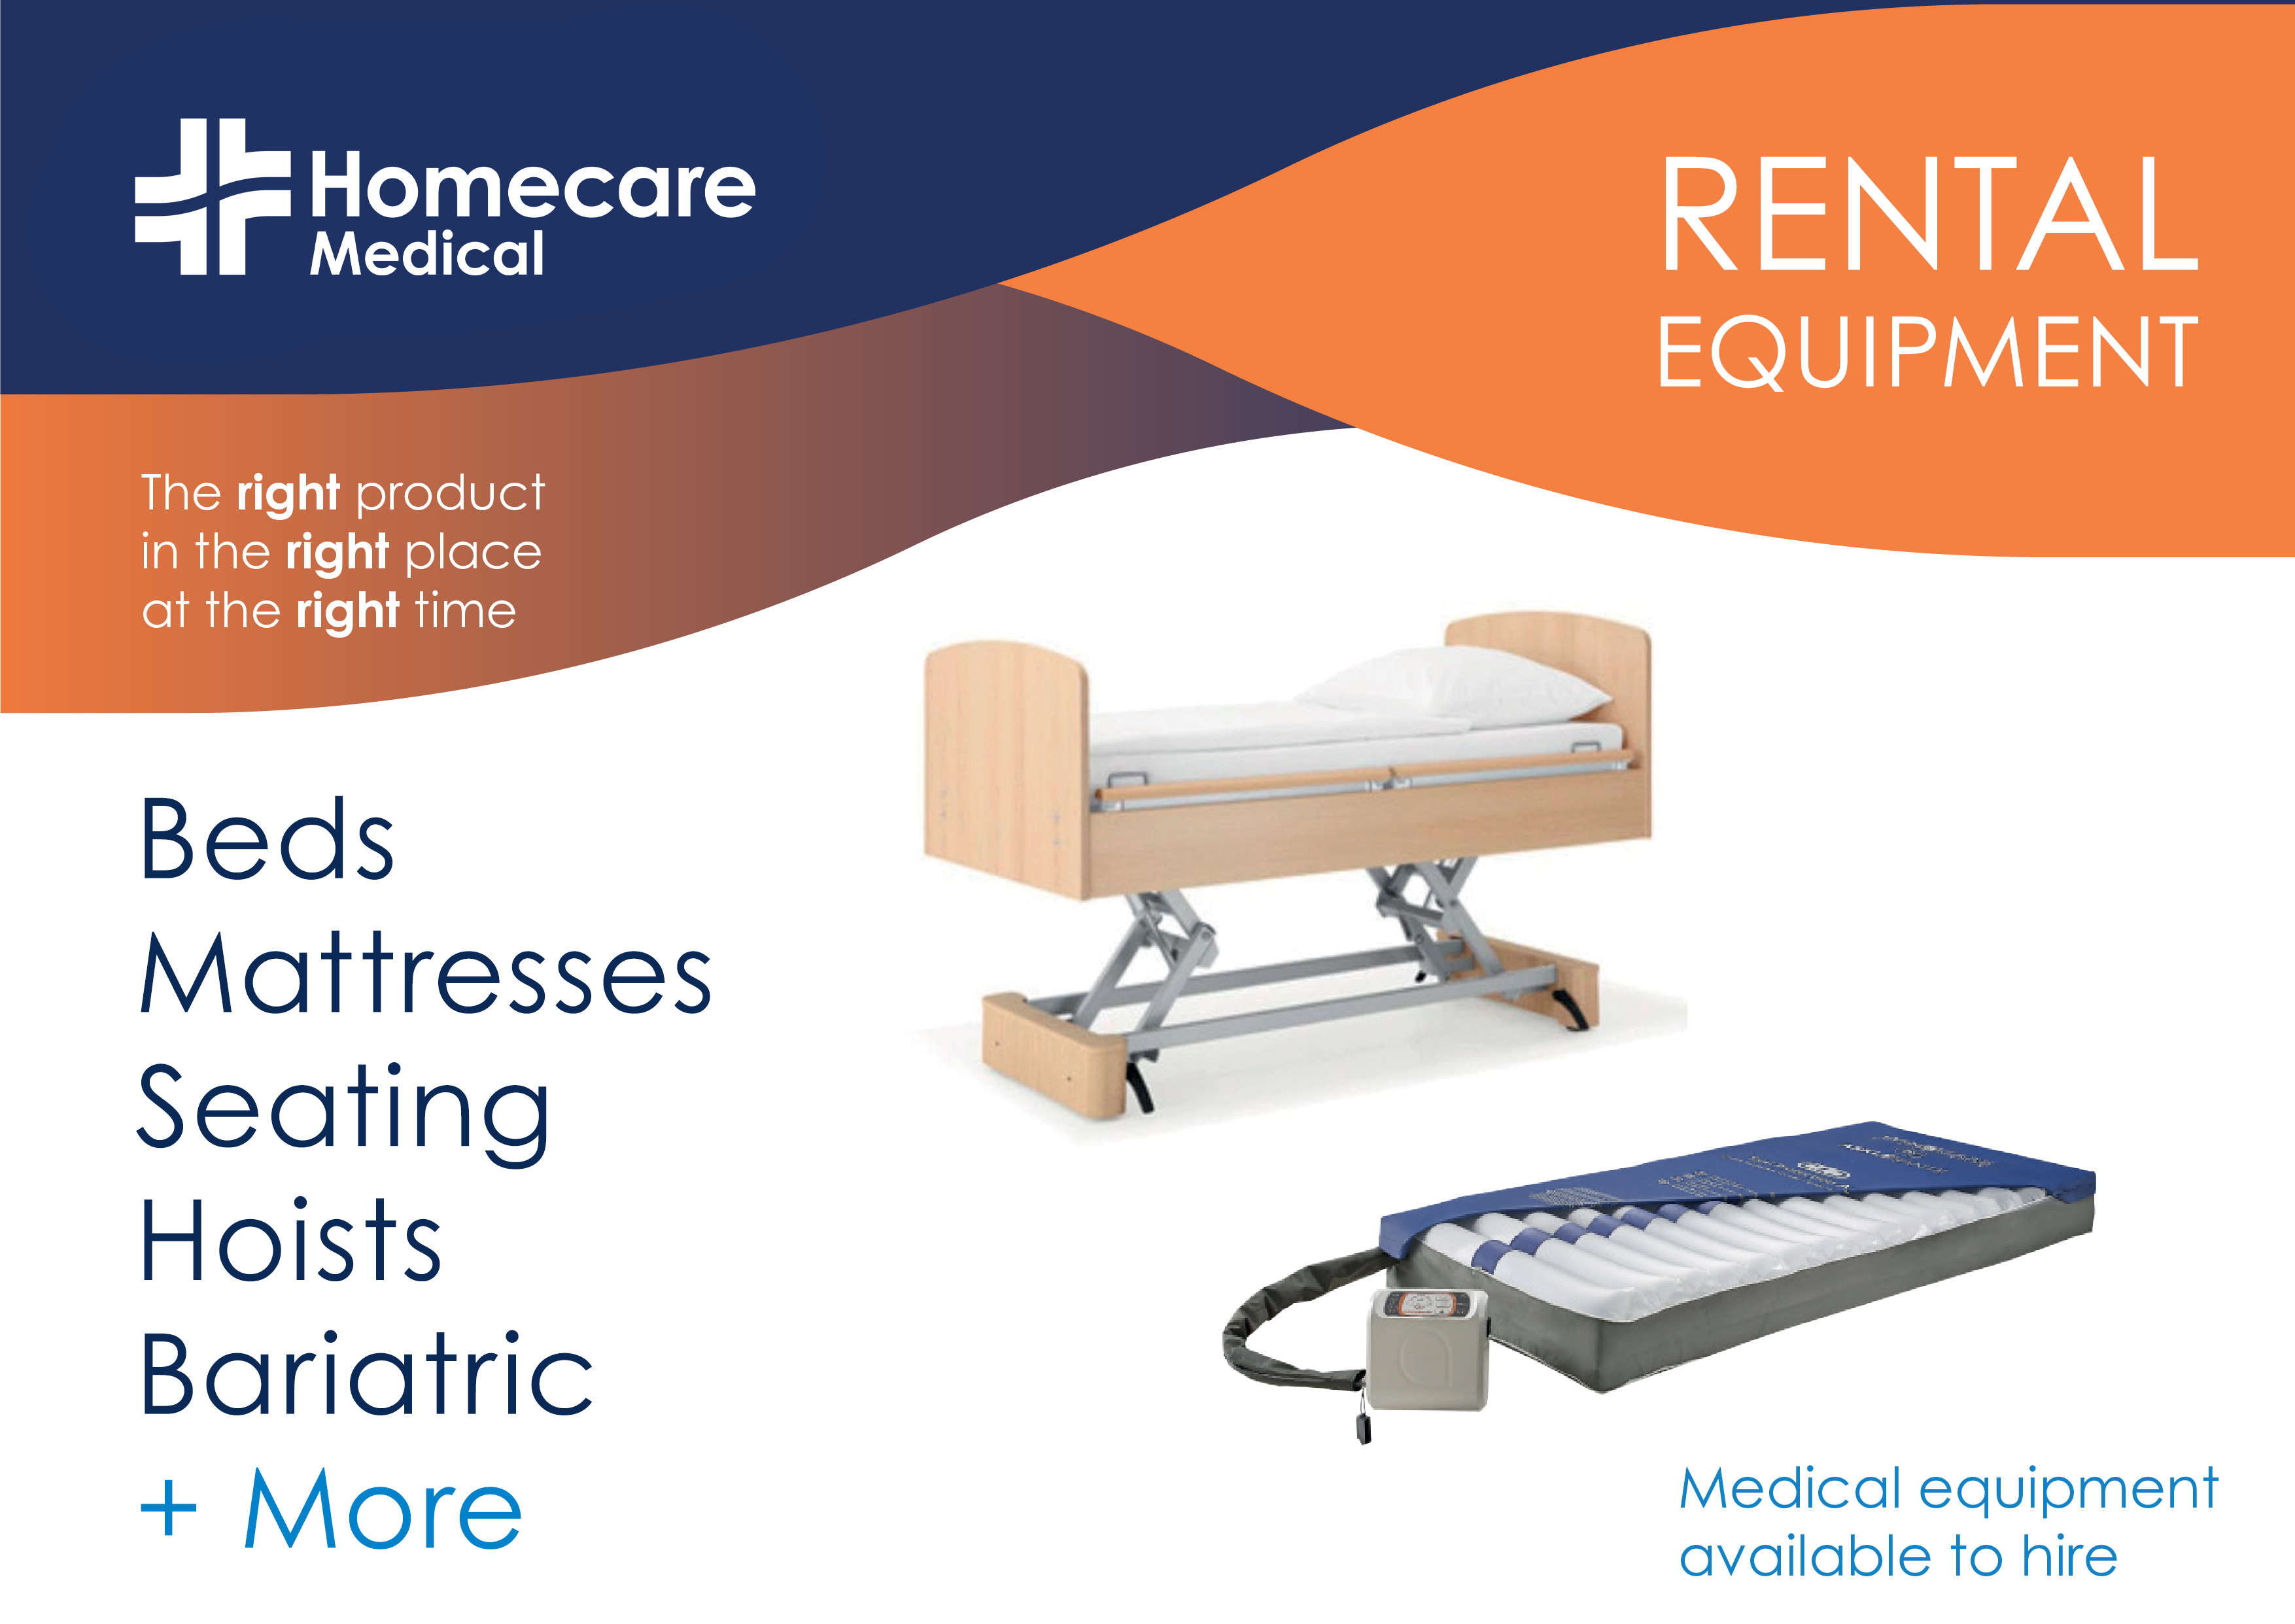 Rental equipment at Homecare Medical